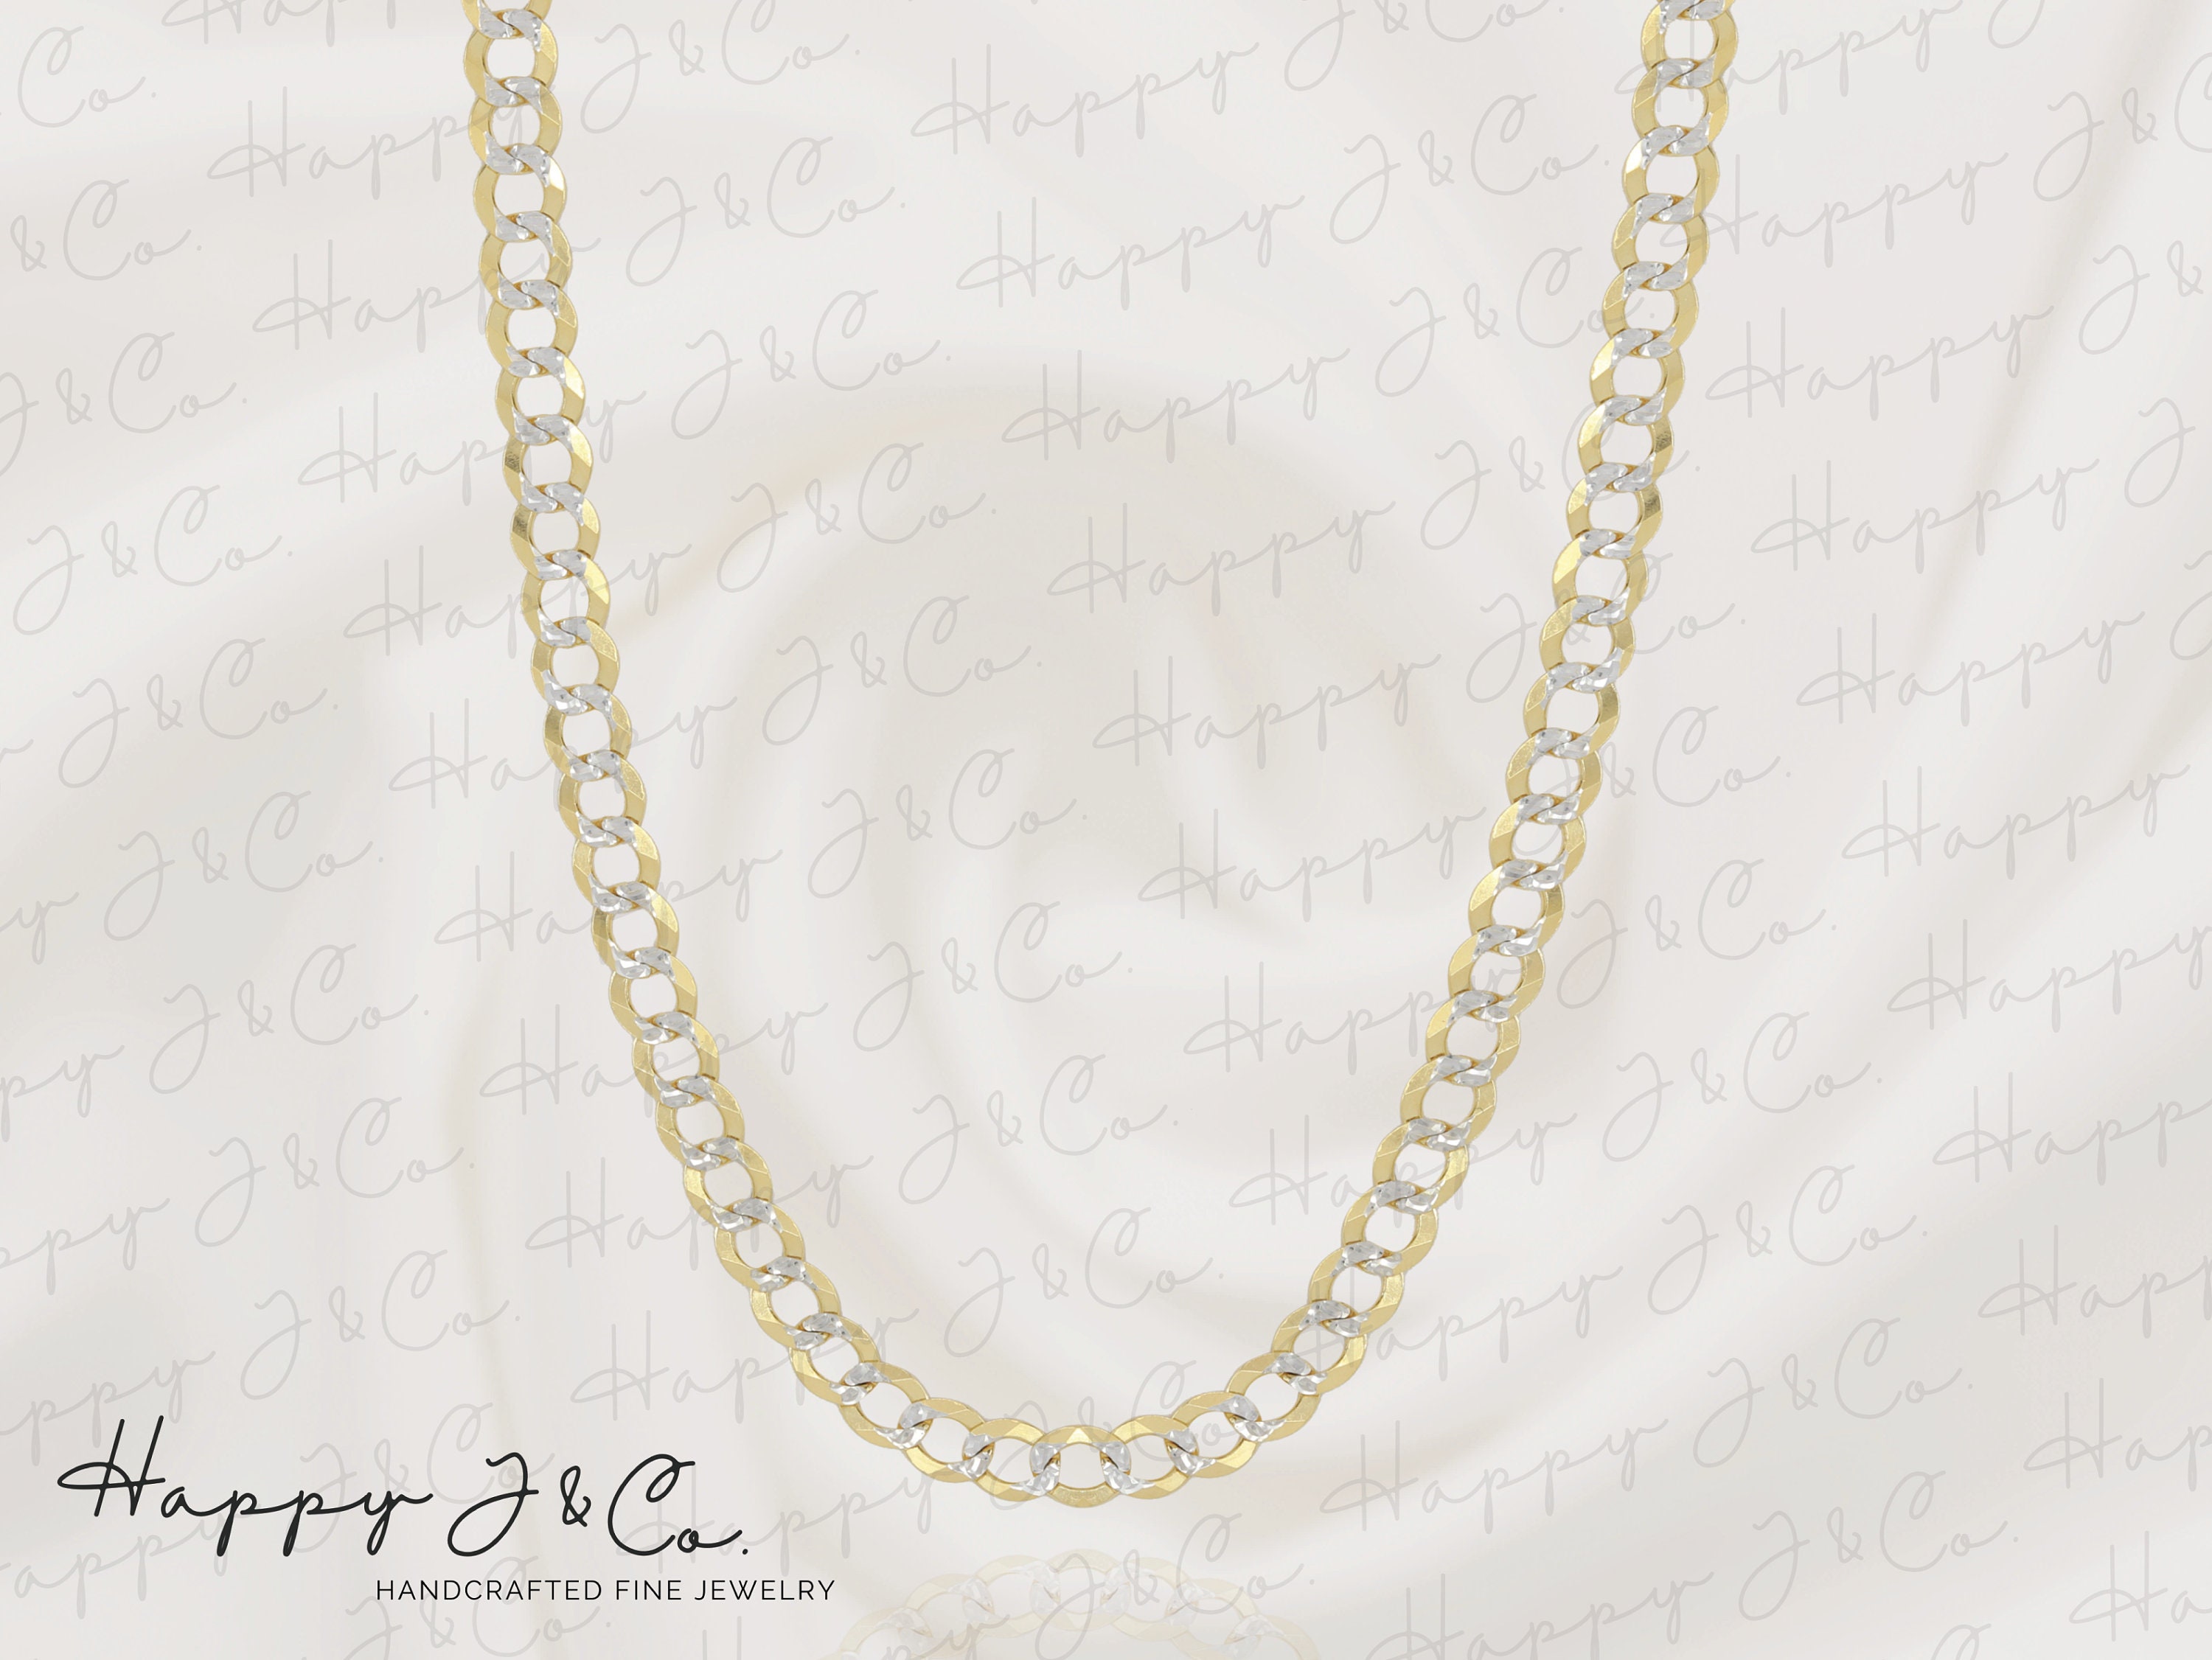 J&CO Jewellery Love Lock Charm Necklace Gold